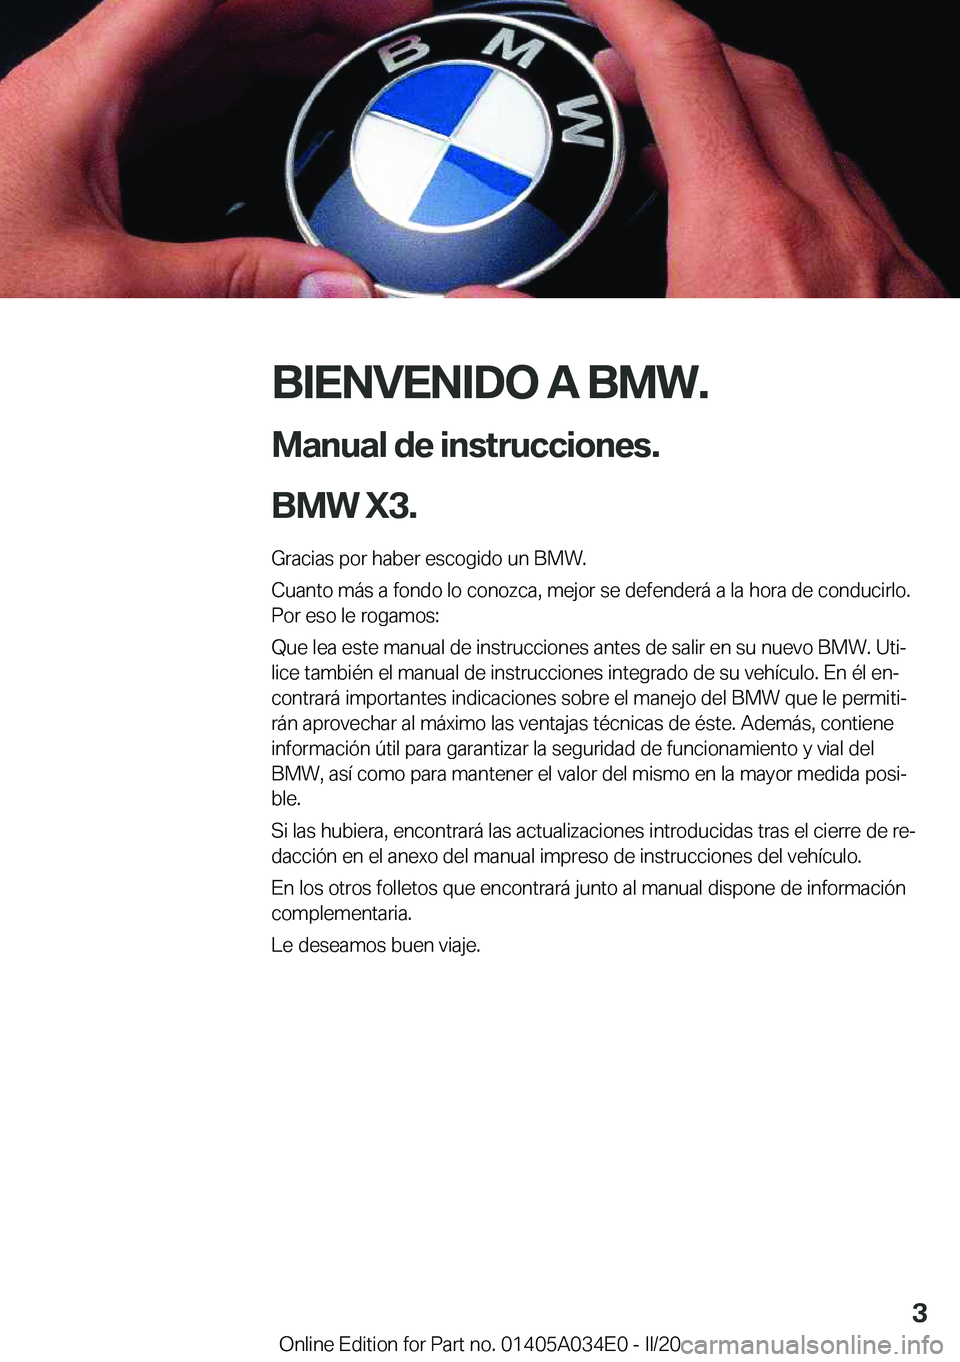 BMW X3 2020  Manuales de Empleo (in Spanish) �B�I�E�N�V�E�N�I�D�O��A��B�M�W�.
�M�a�n�u�a�l��d�e��i�n�s�t�r�u�c�c�i�o�n�e�s�.
�B�M�W��X�3�. �G�r�a�c�i�a�s��p�o�r��h�a�b�e�r��e�s�c�o�g�i�d�o��u�n��B�M�W�.�C�u�a�n�t�o��m�